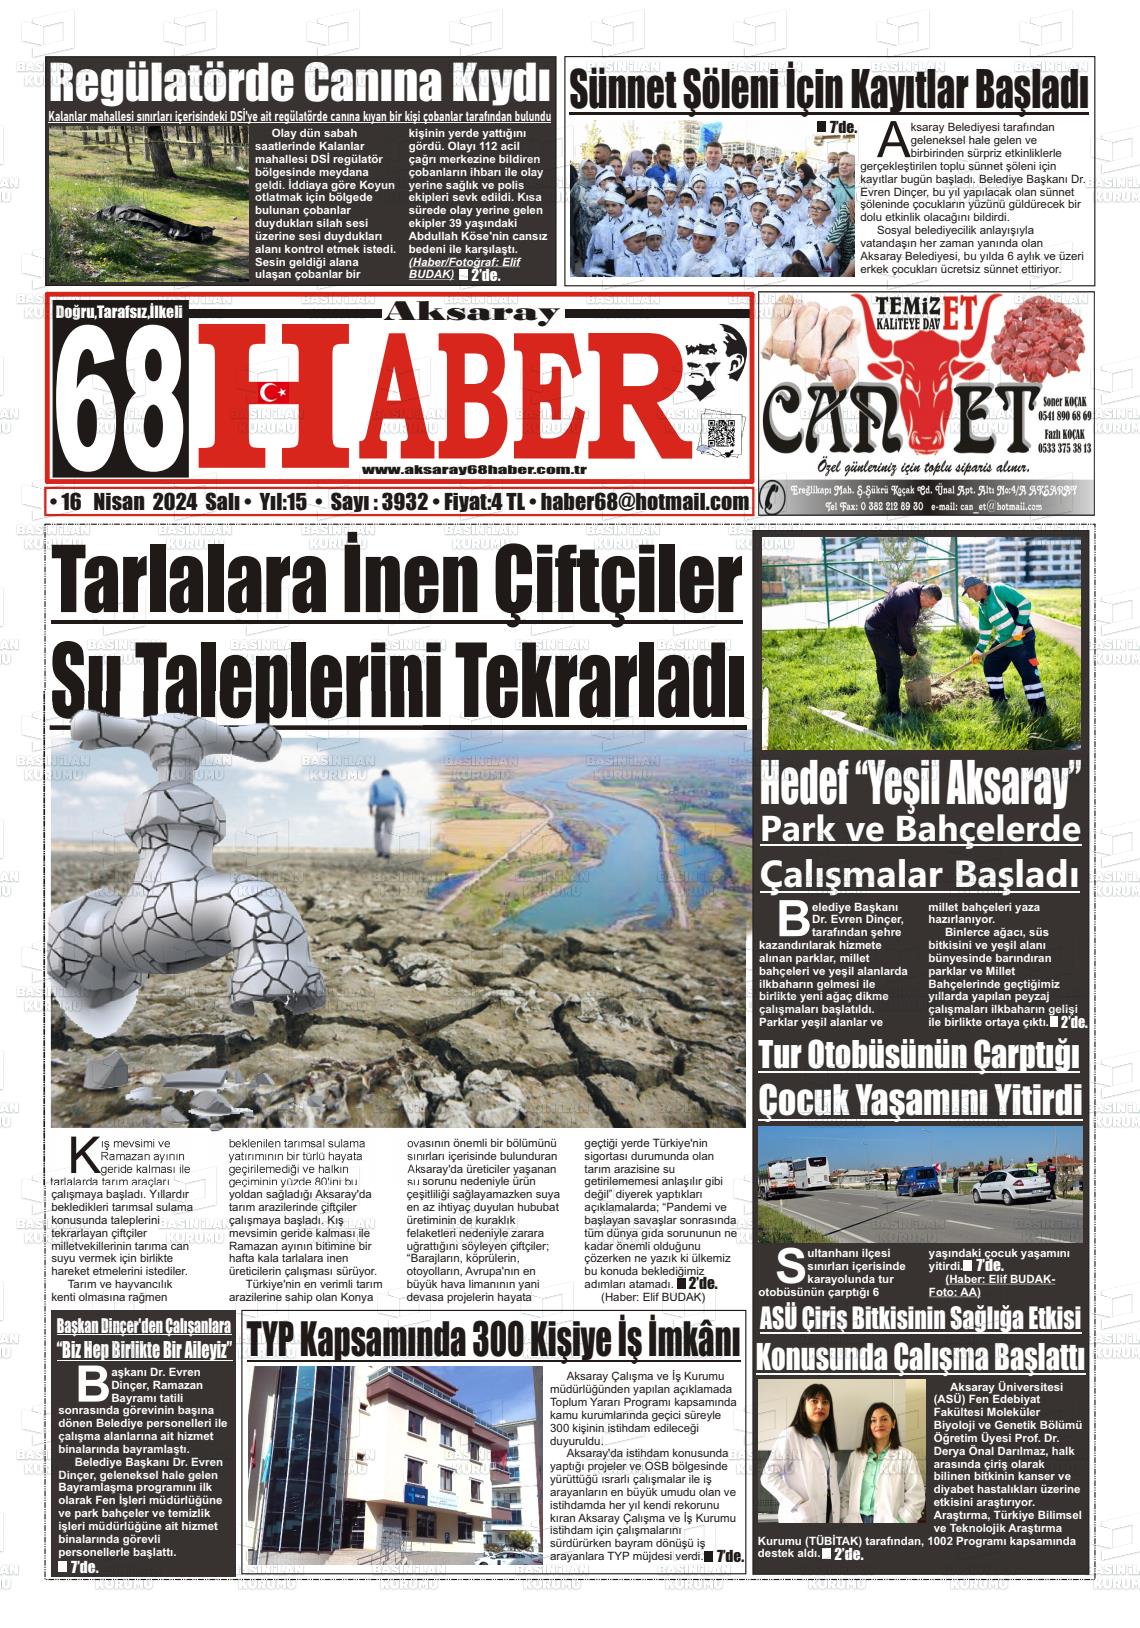 18 Nisan 2024 Aksaray 68 Haber Gazete Manşeti